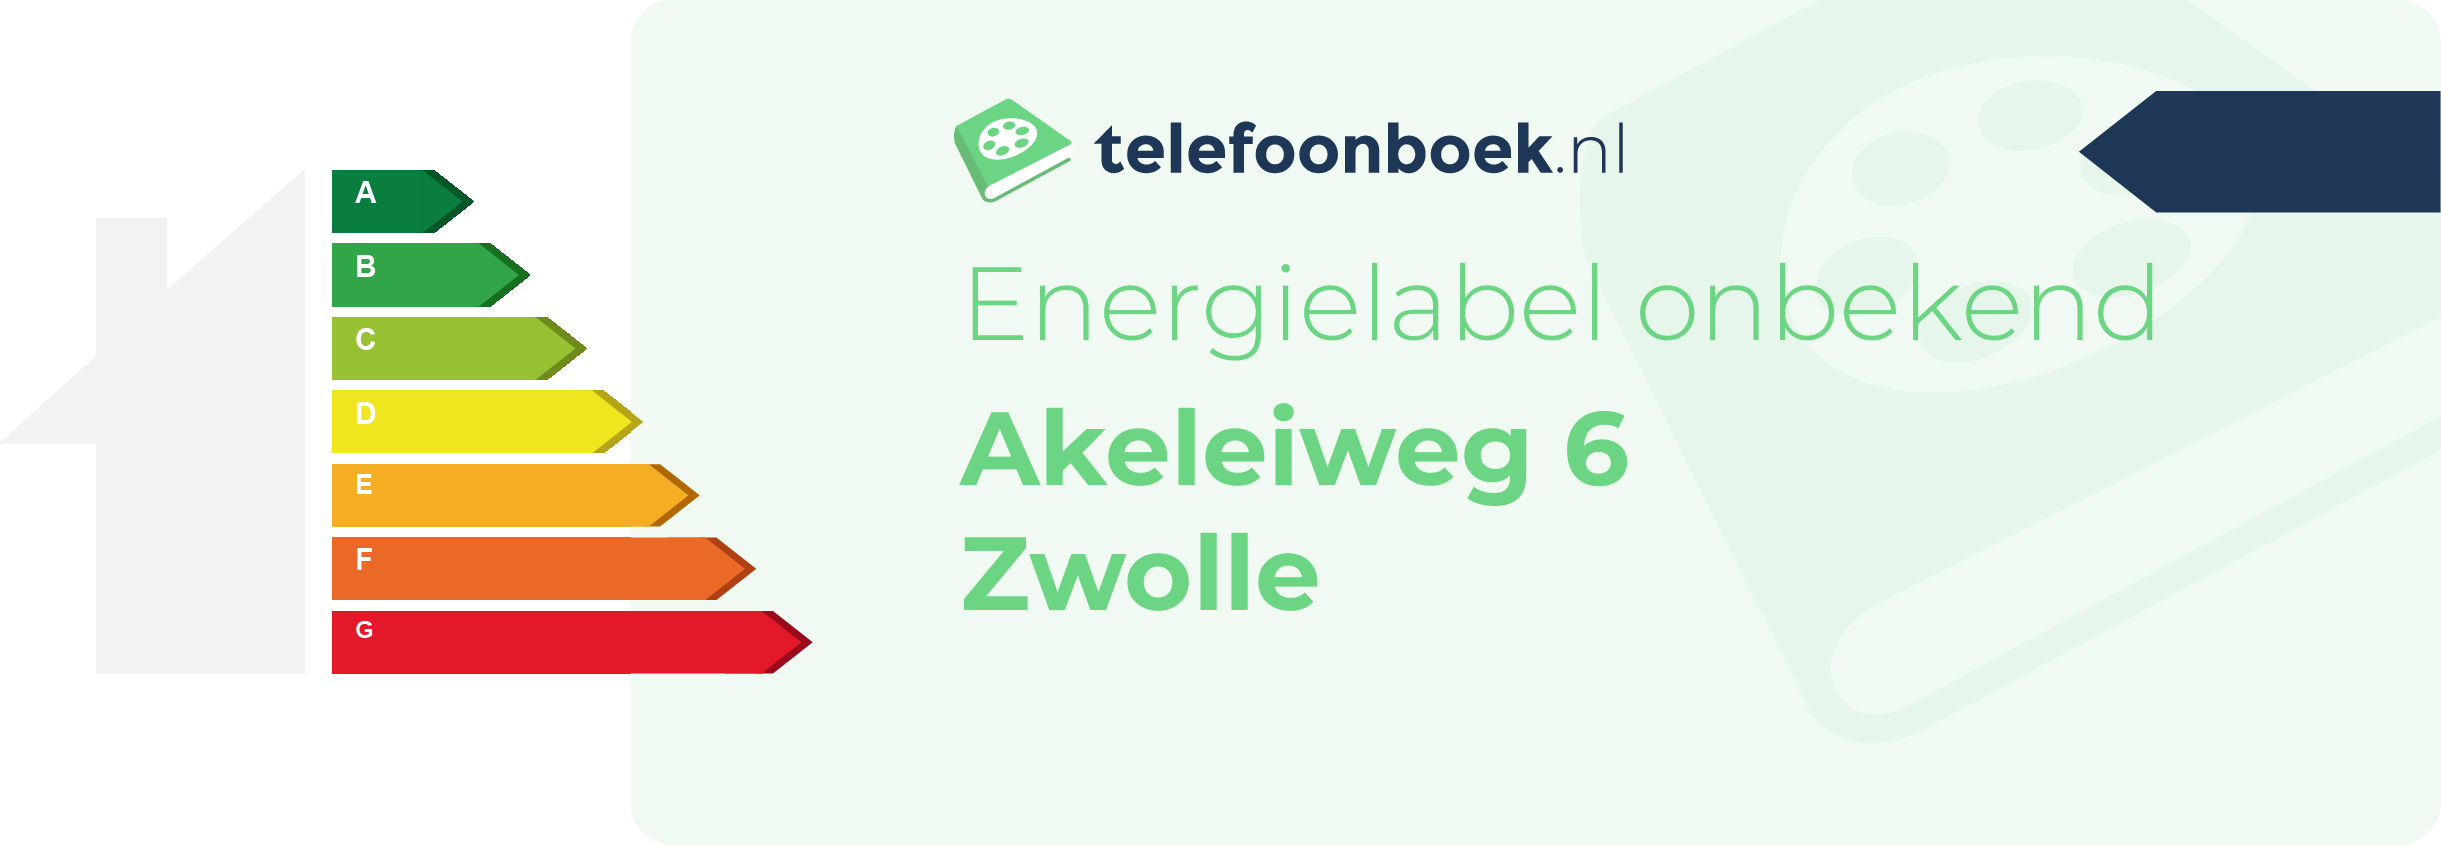 Energielabel Akeleiweg 6 Zwolle